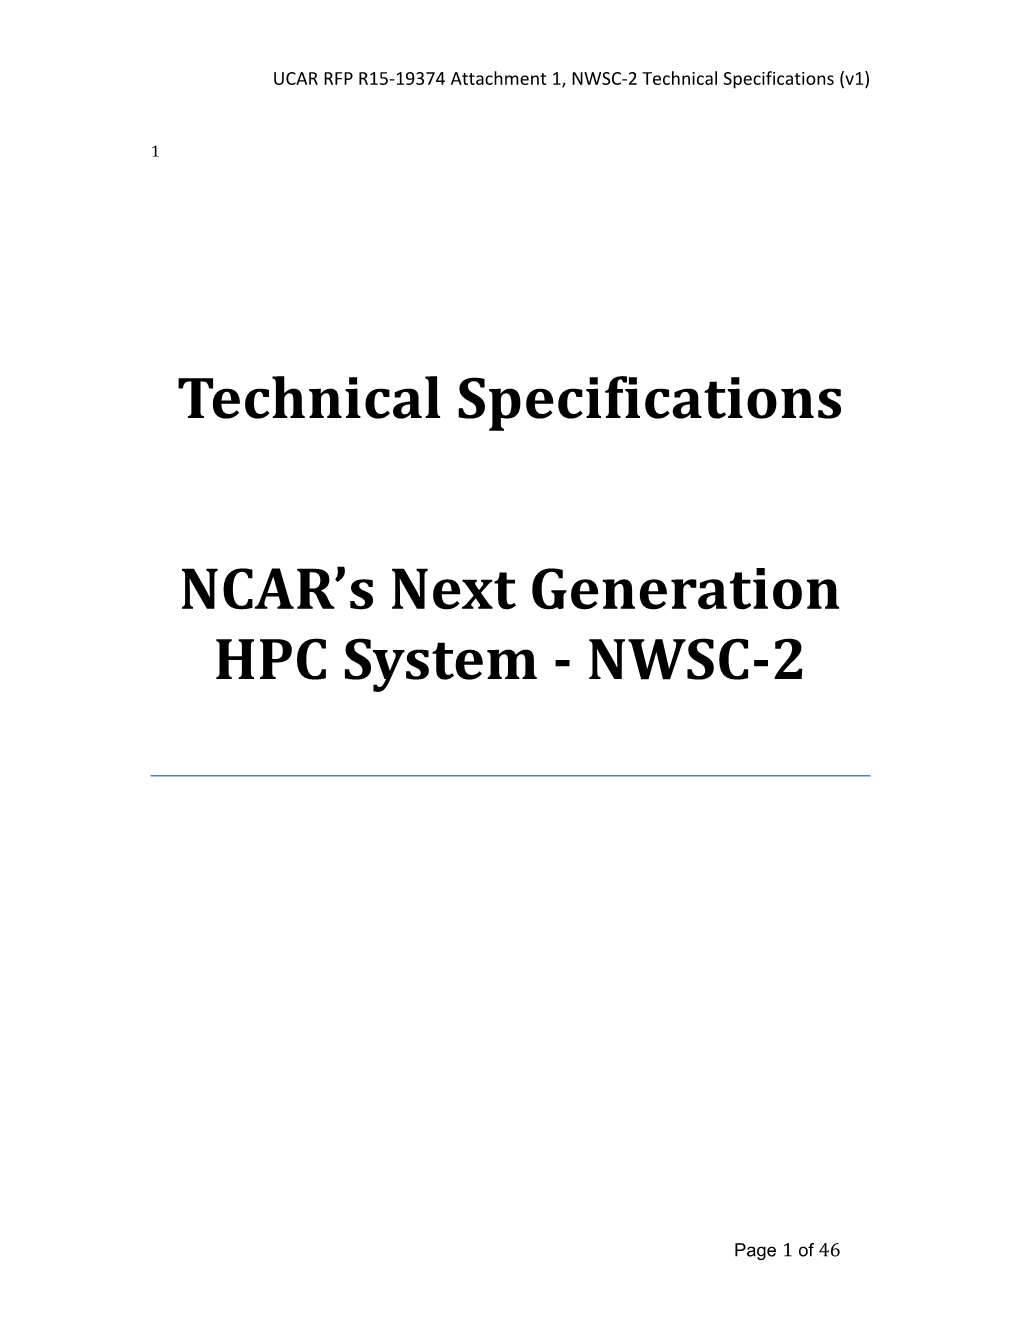 NWSC-2 RFP Tech Specs